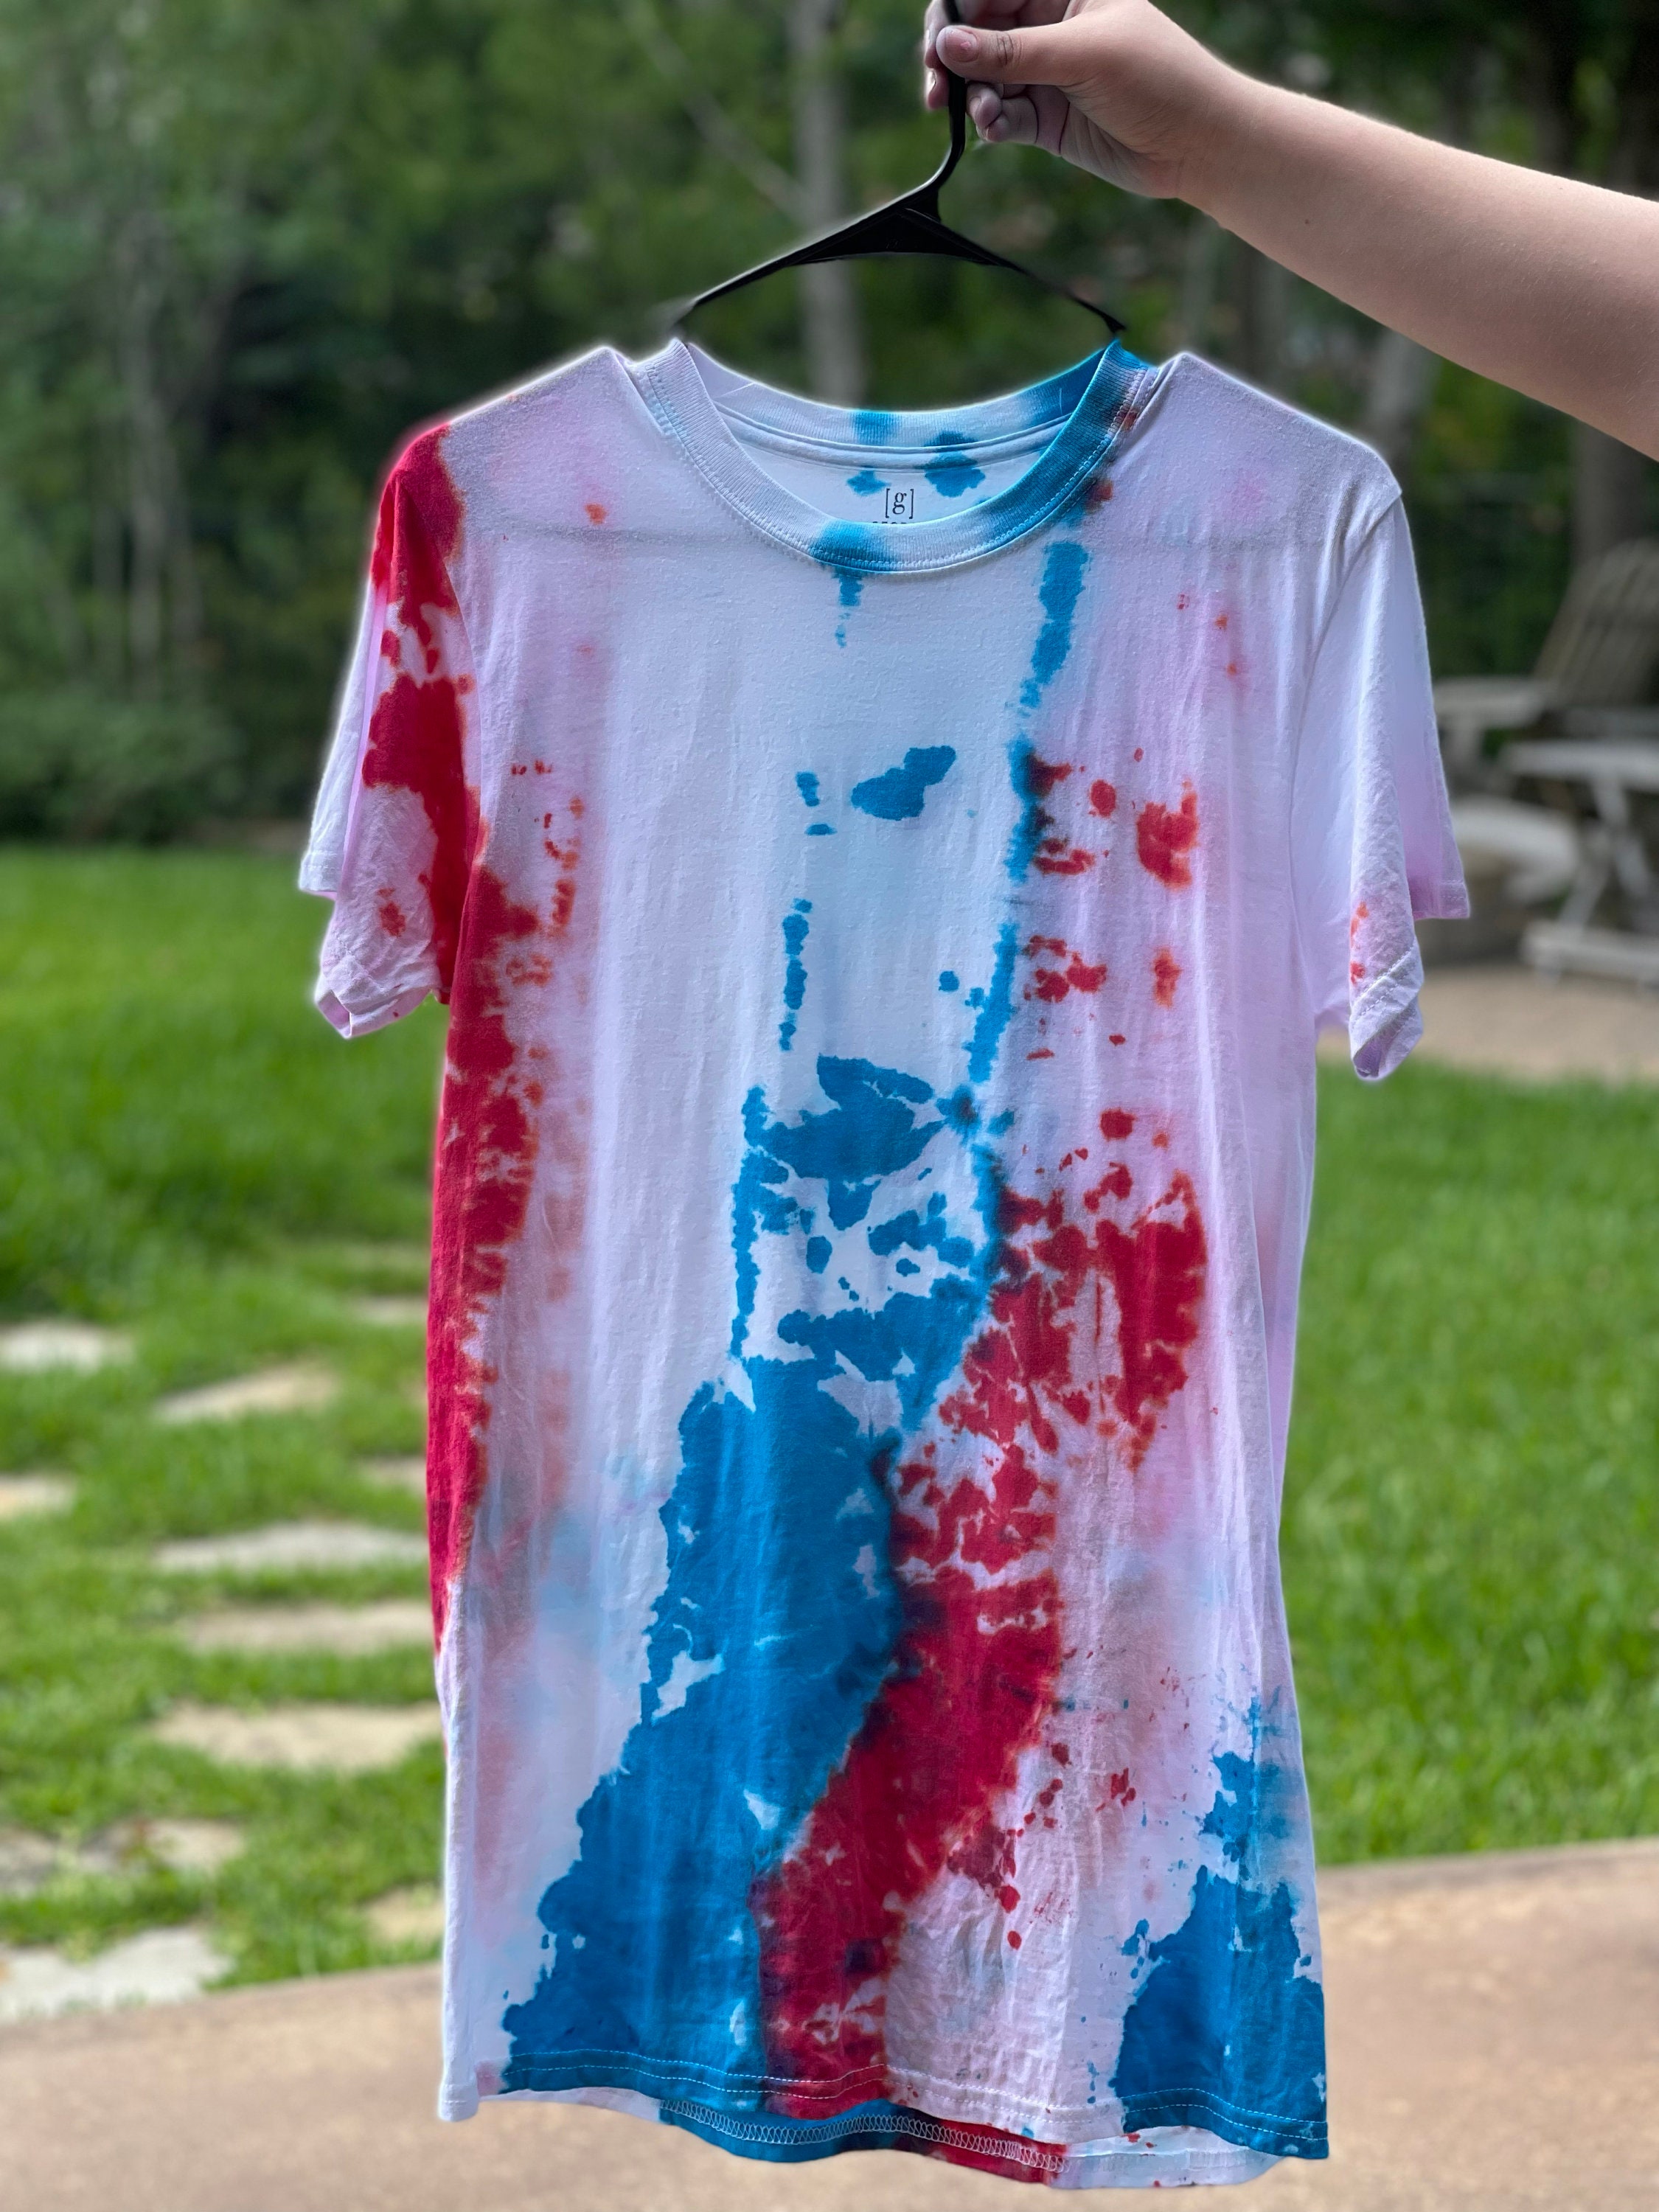 Spider Tie Dye T-Shirt Medium Red, White & Blue Chaos